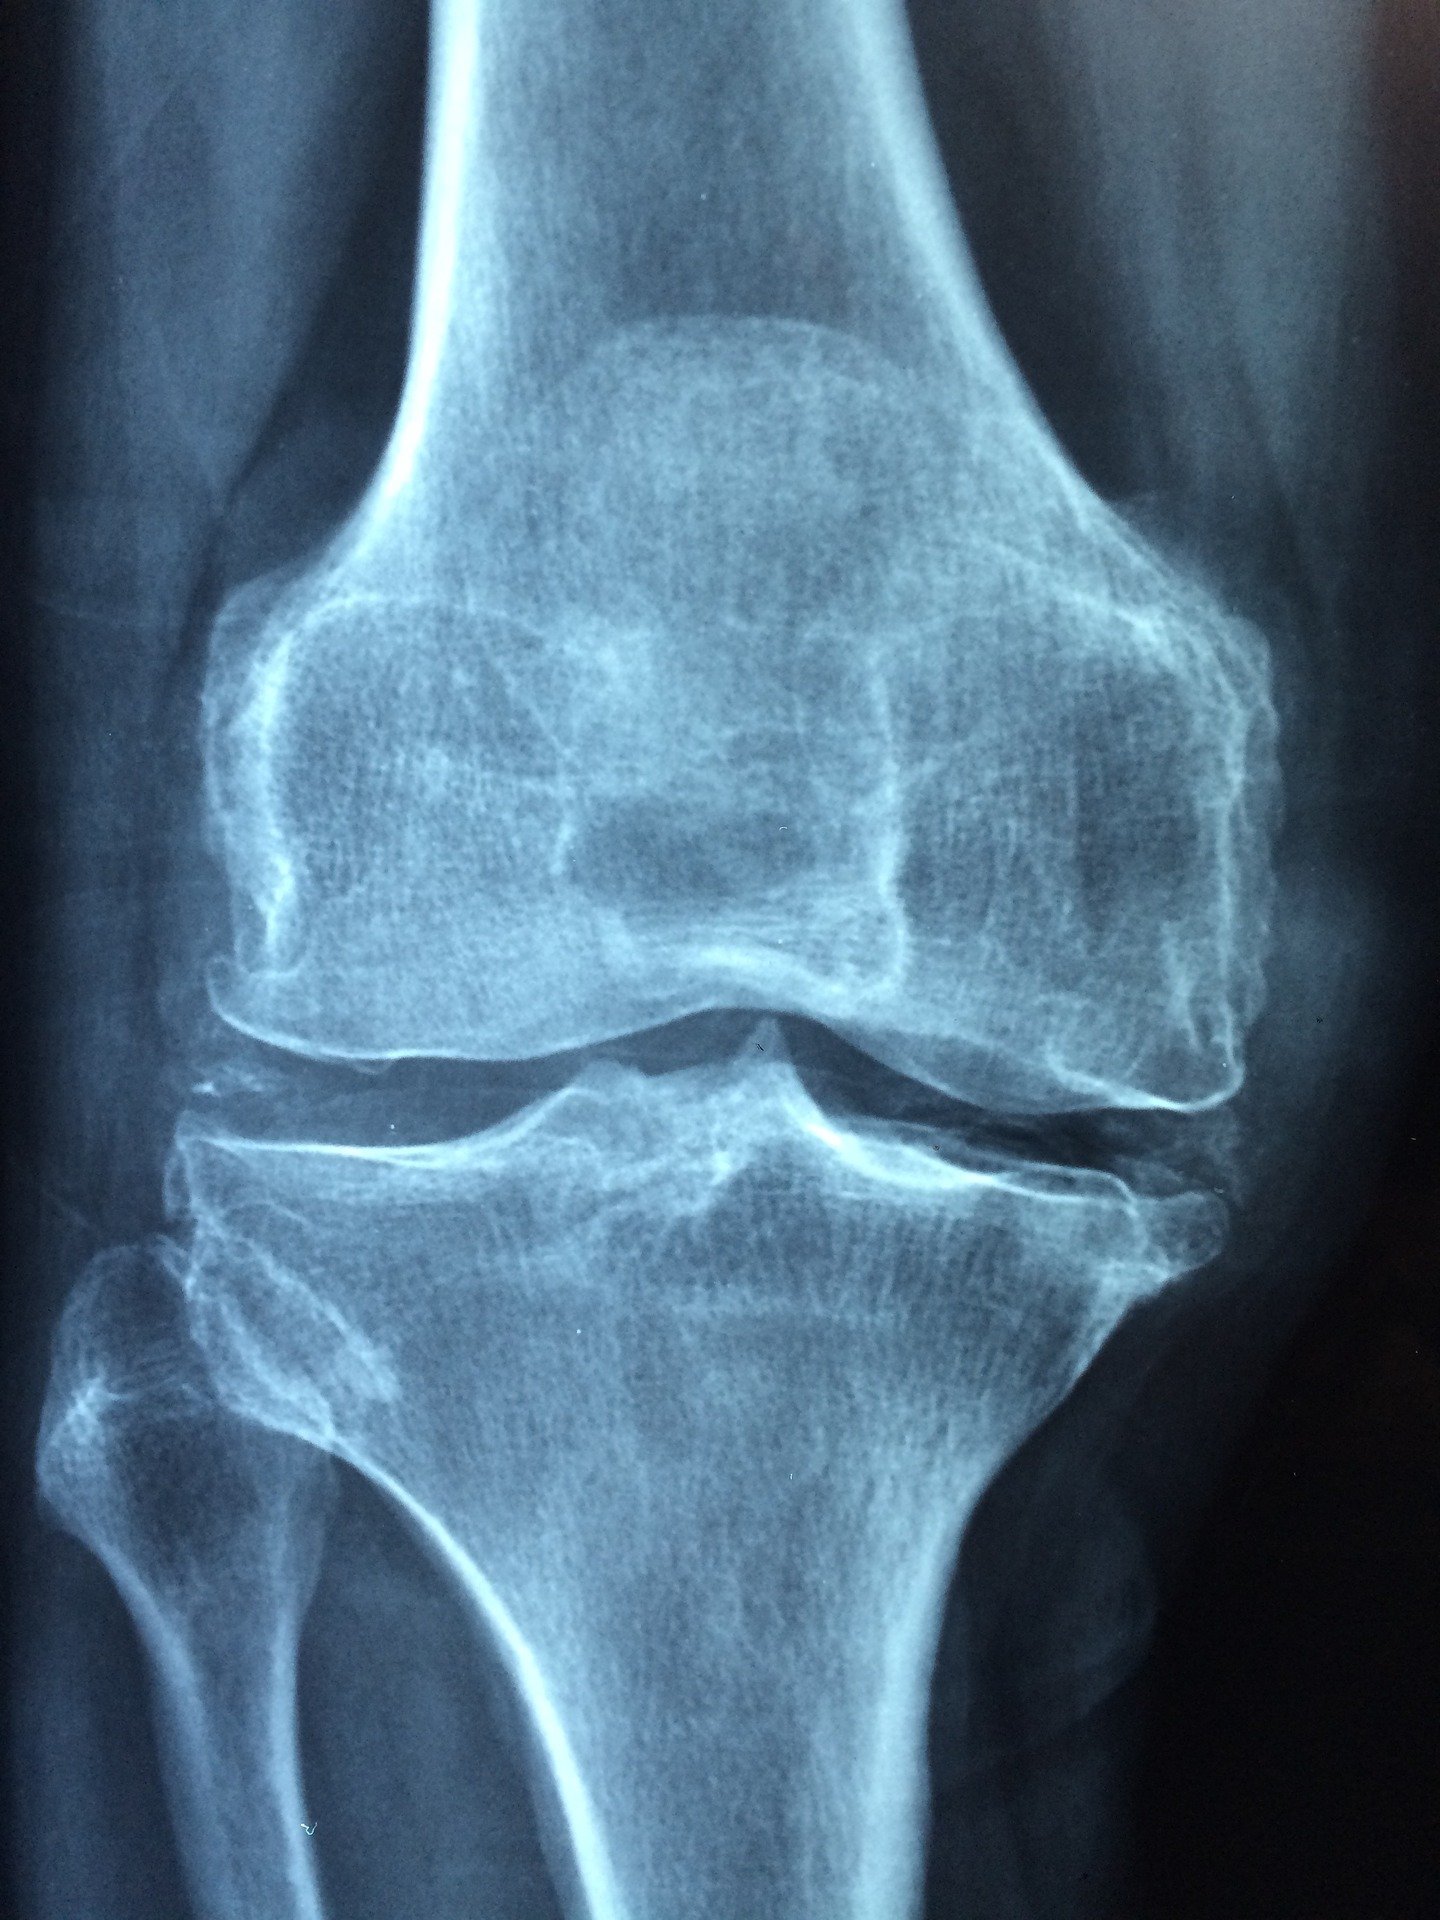 Can I get Social Security Disability for my rheumatoid arthritis of the knee?